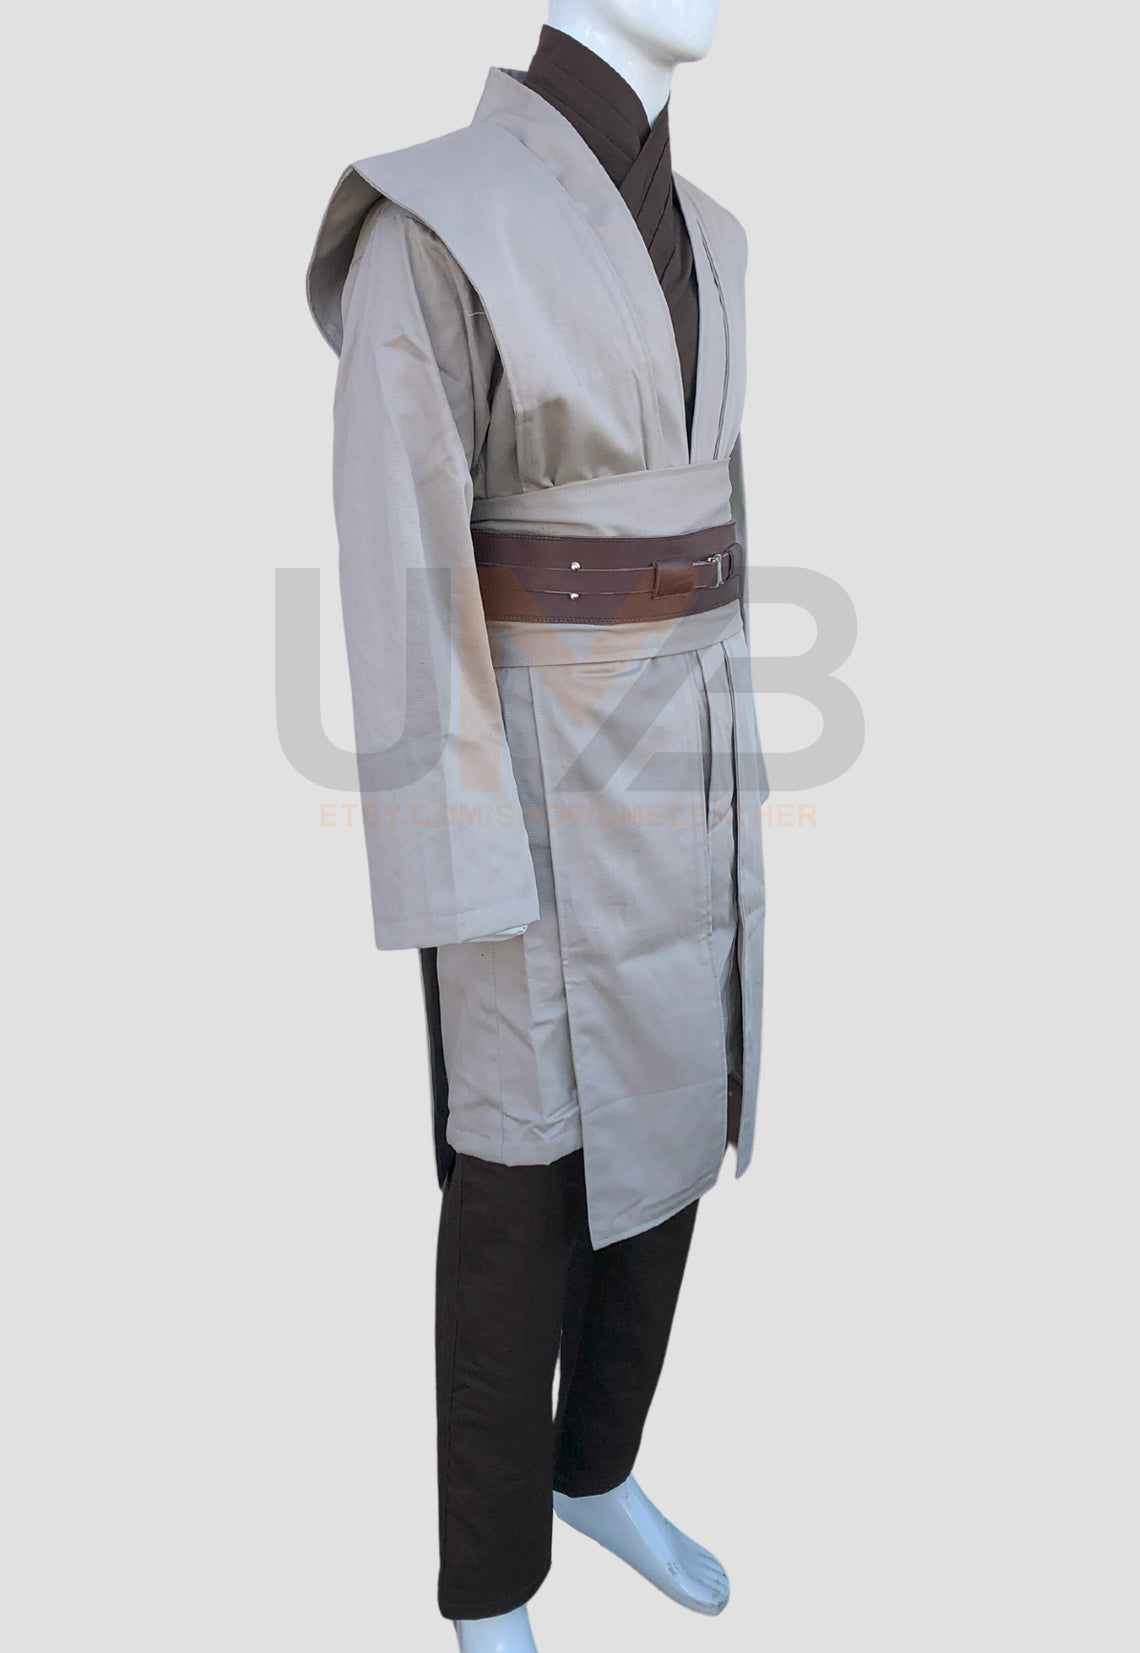 Obi wan kenobi costume